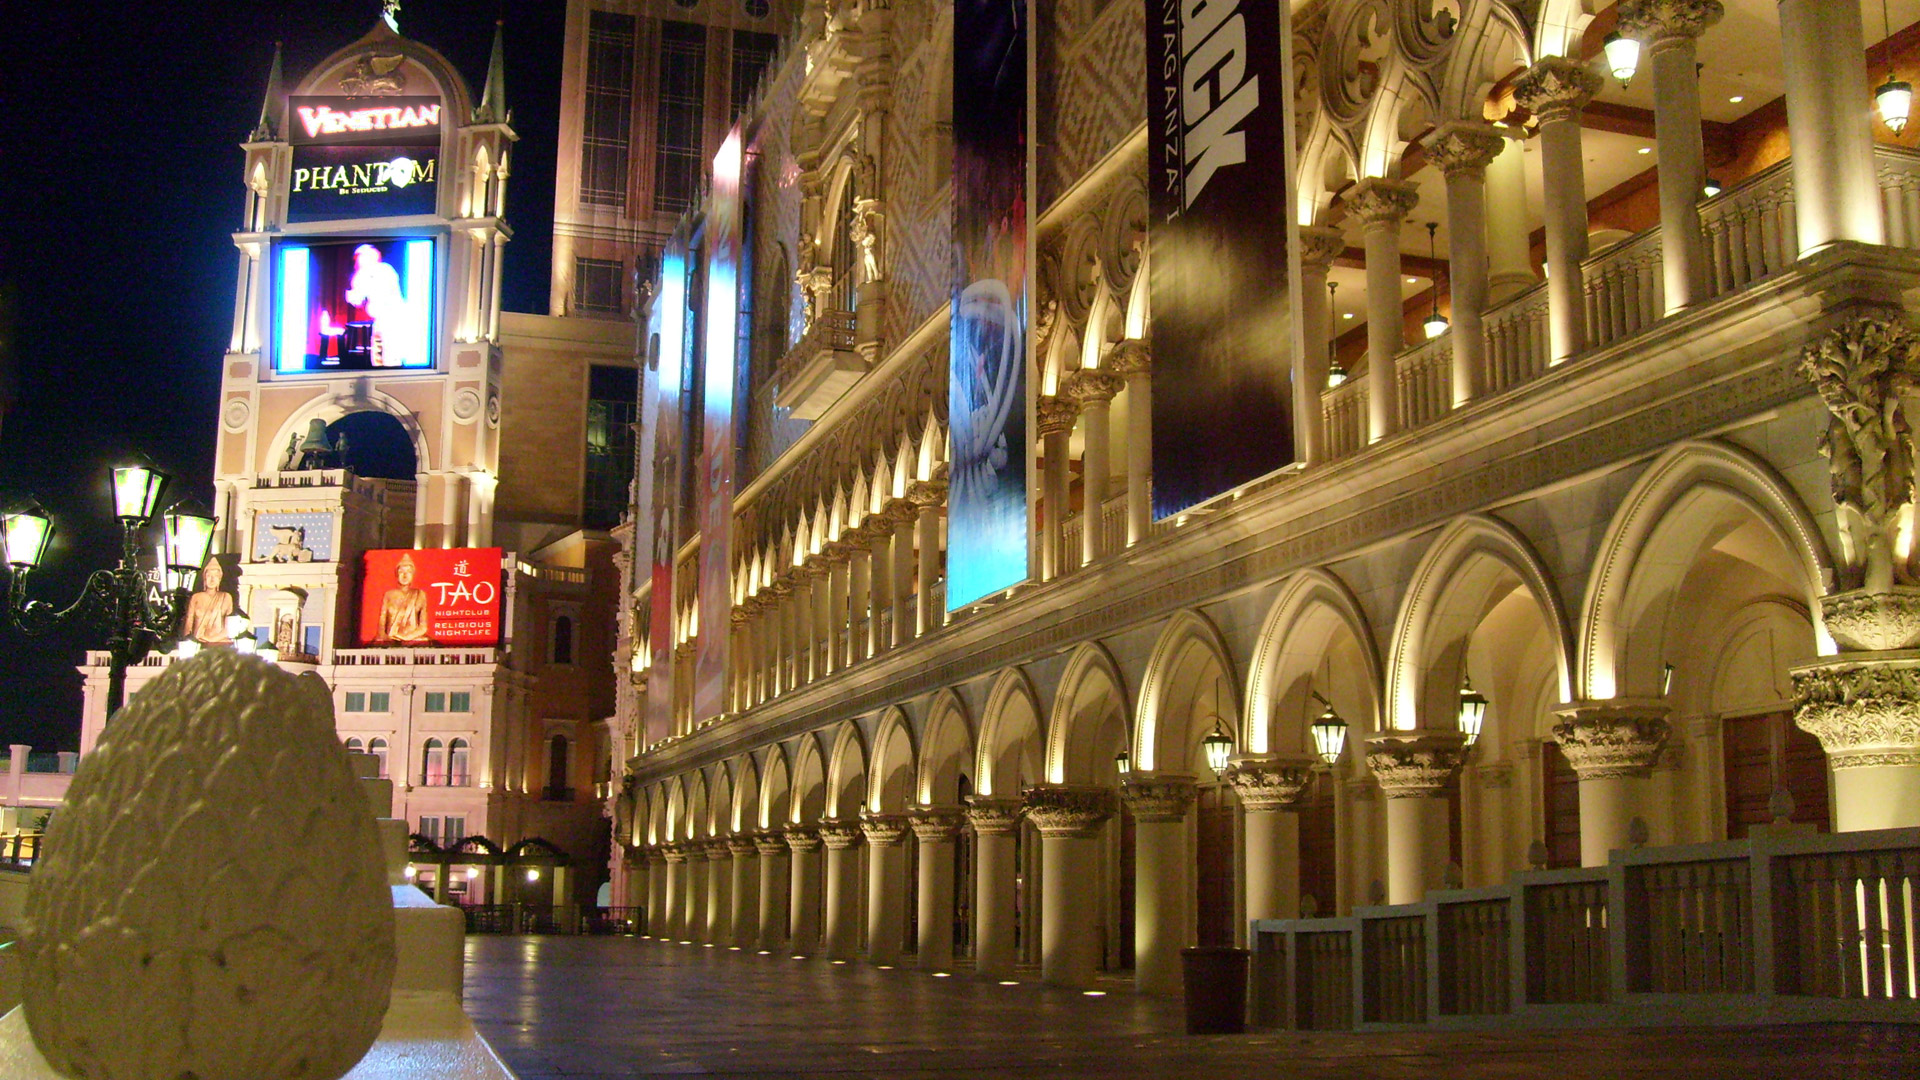 Venetian Casino, Las Vegas, NV USA